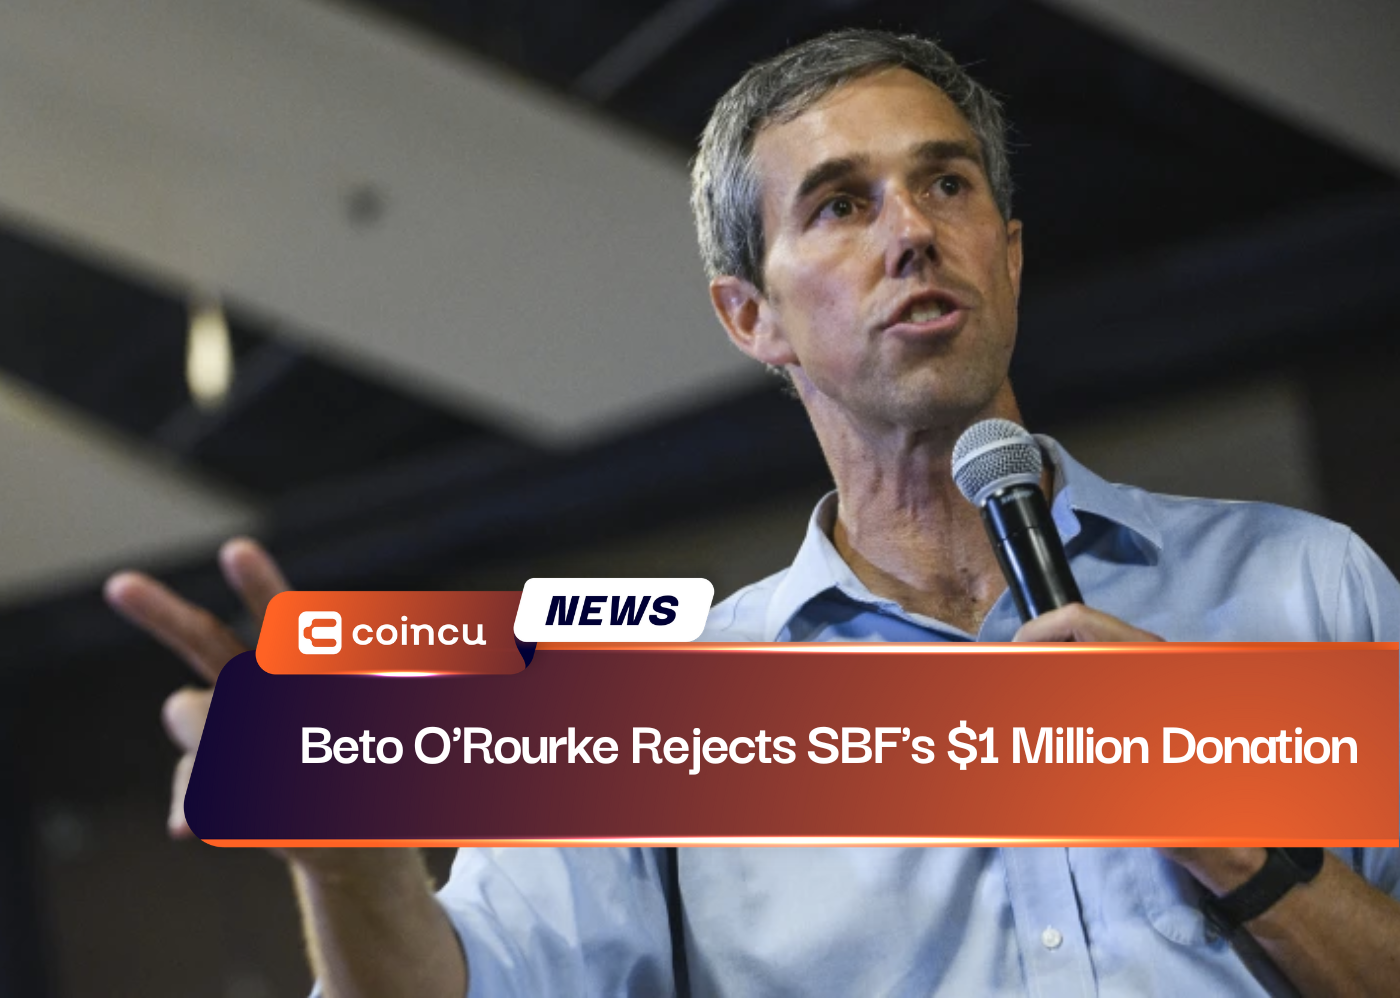 Beto O'Rourke Rejects SBF's $1 Million Donation